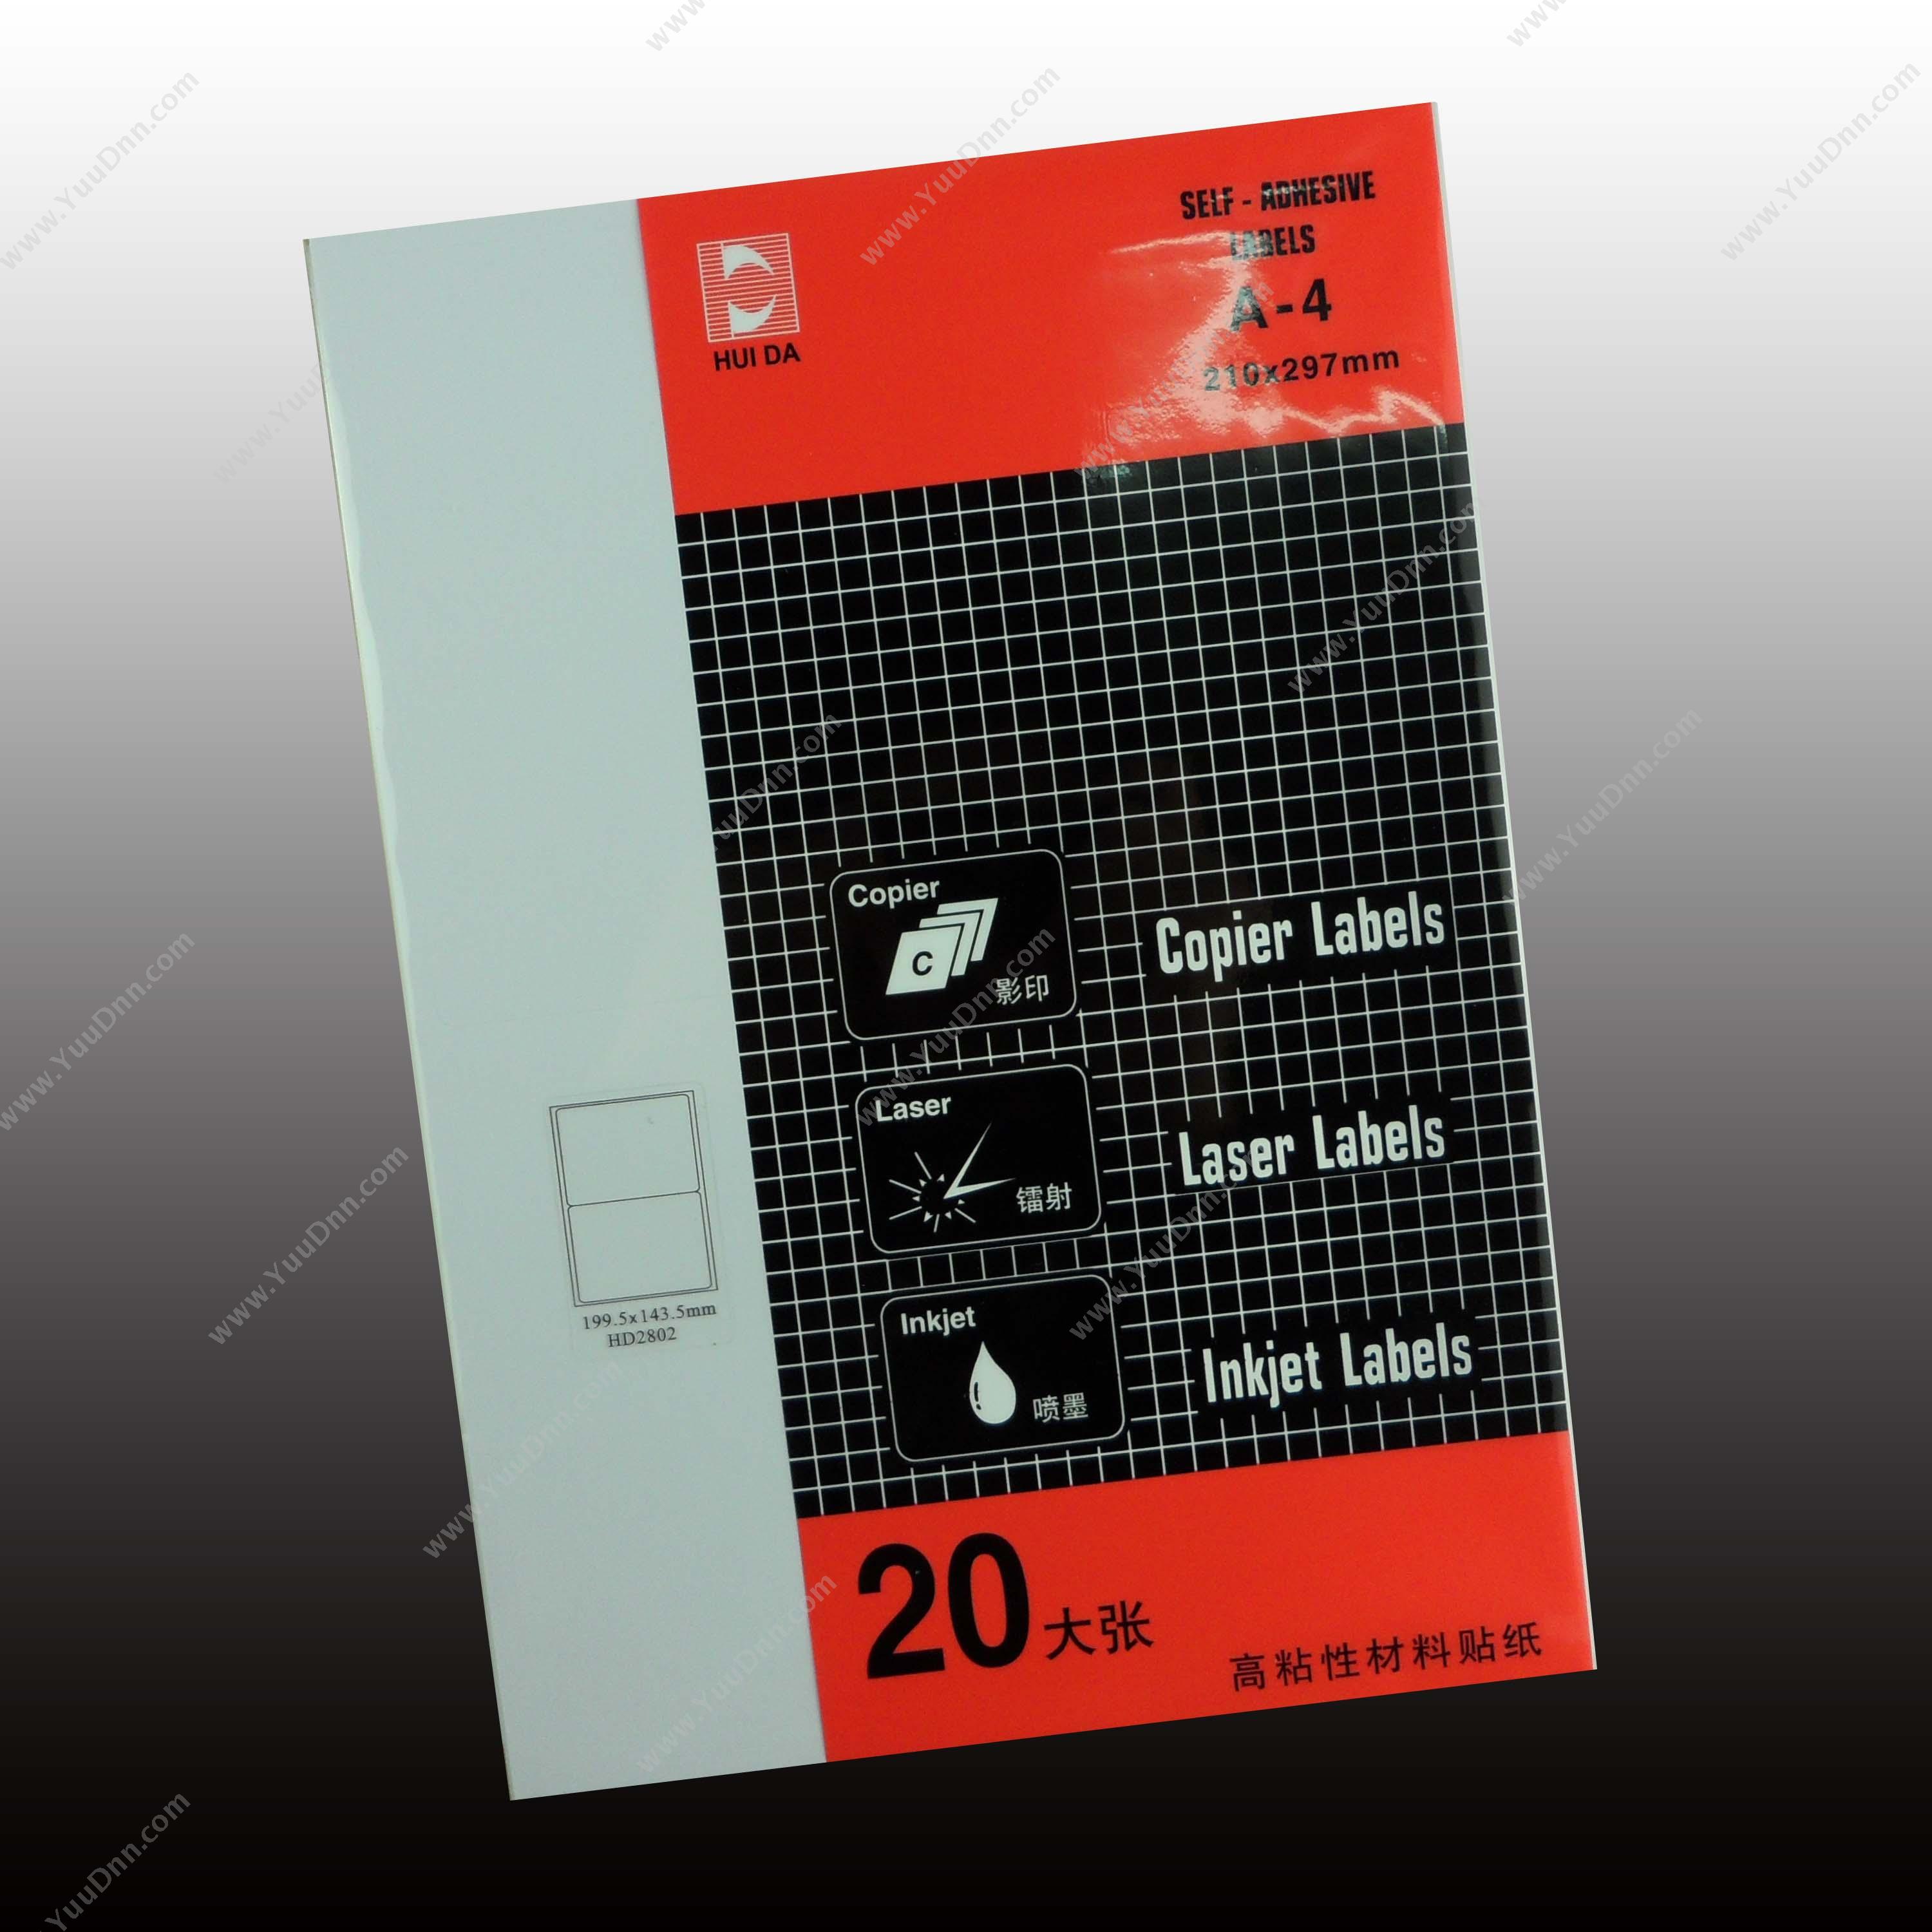 惠达 HuiDa HD-2802 打印标签 20张/包 199.5*143.5mm （白） 激光打印标签